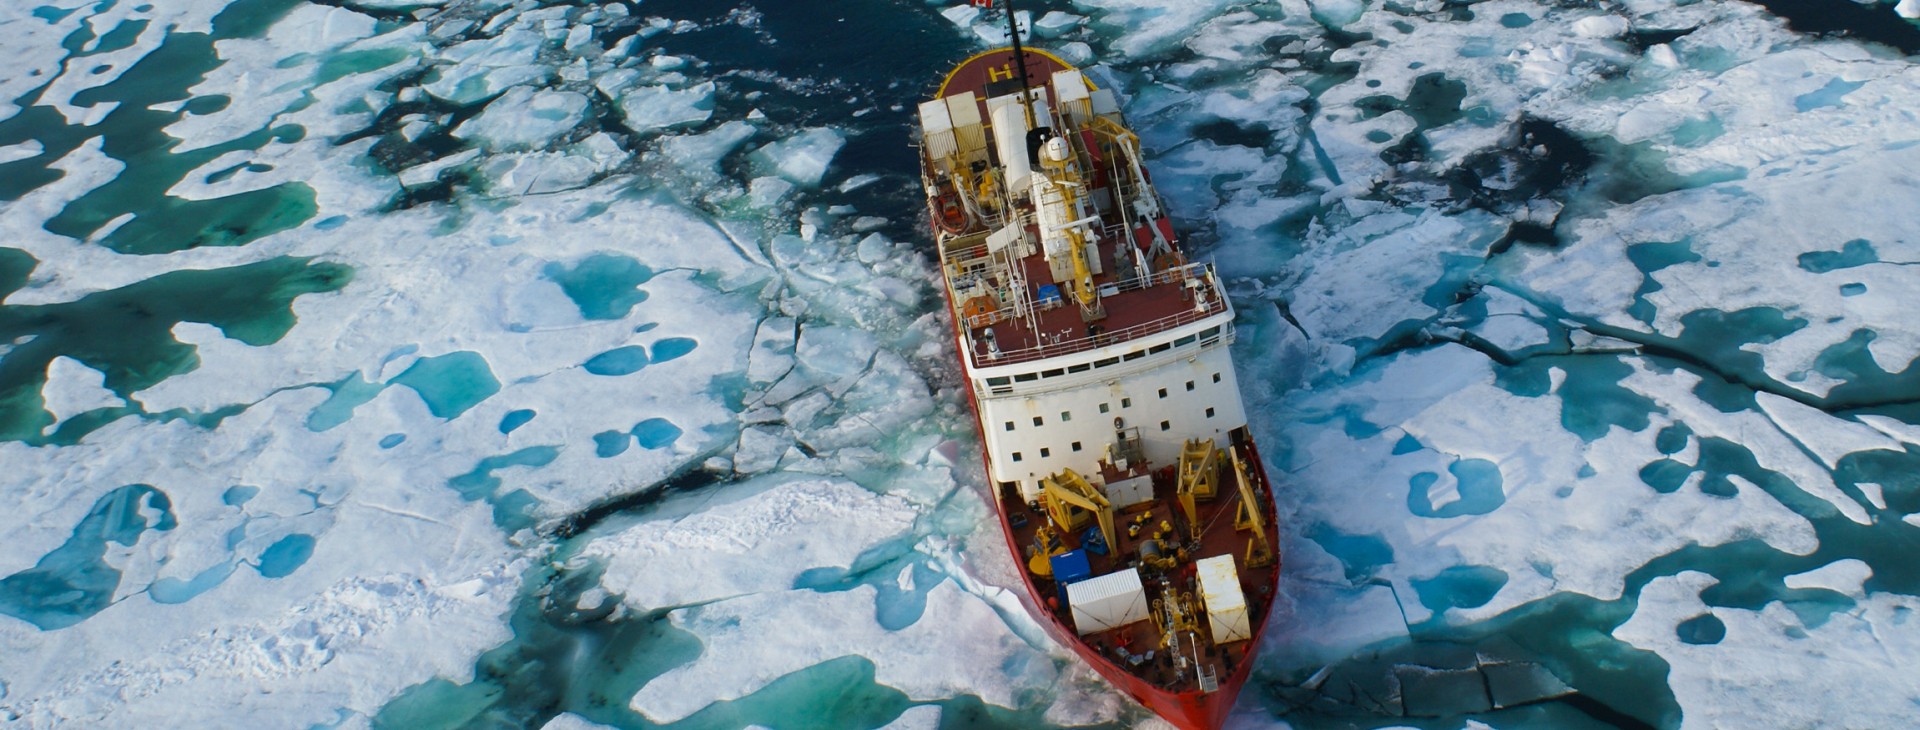 Brise-glace Amundsen